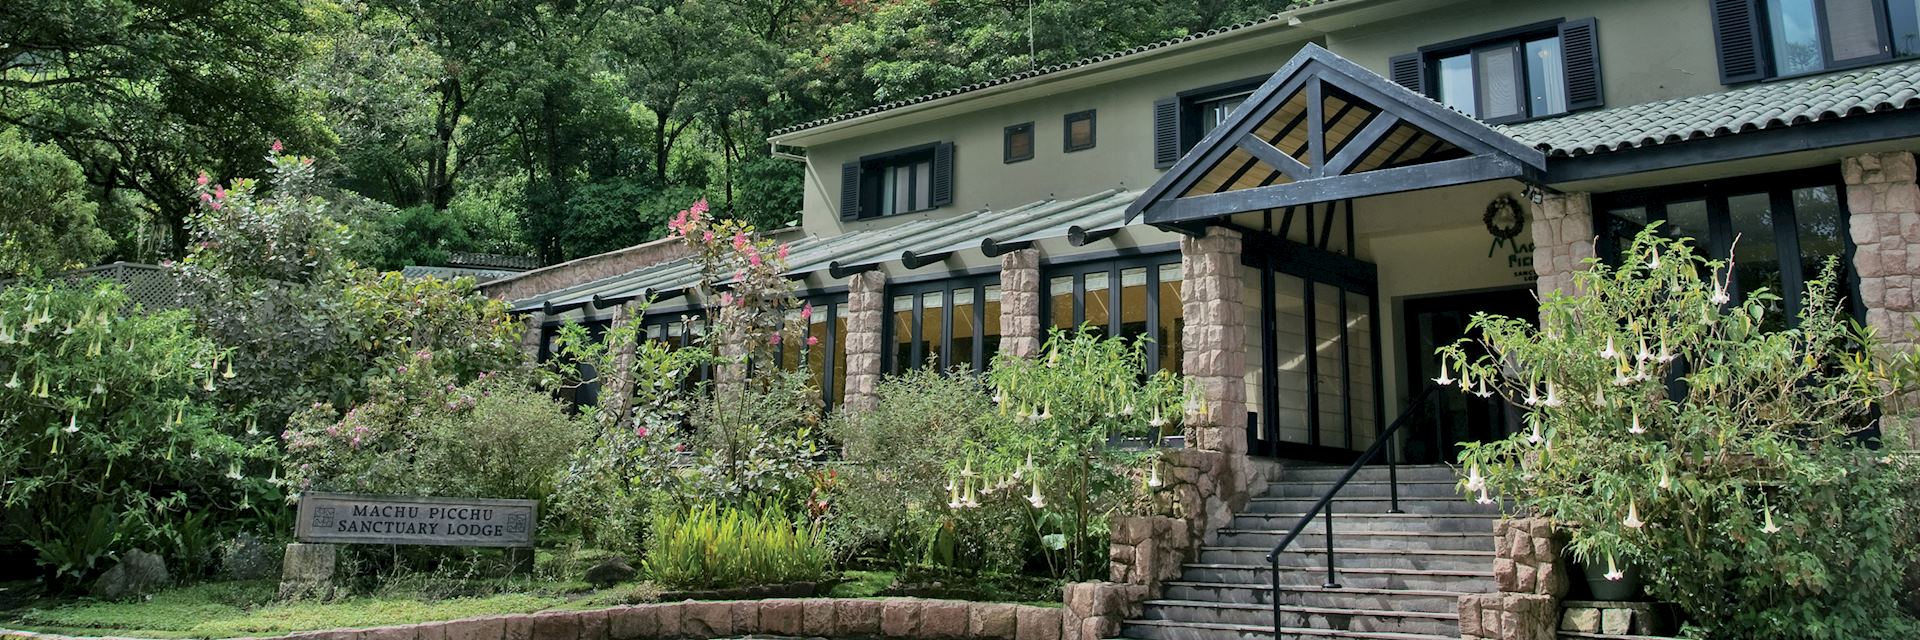 Belmond Sanctuary Lodge